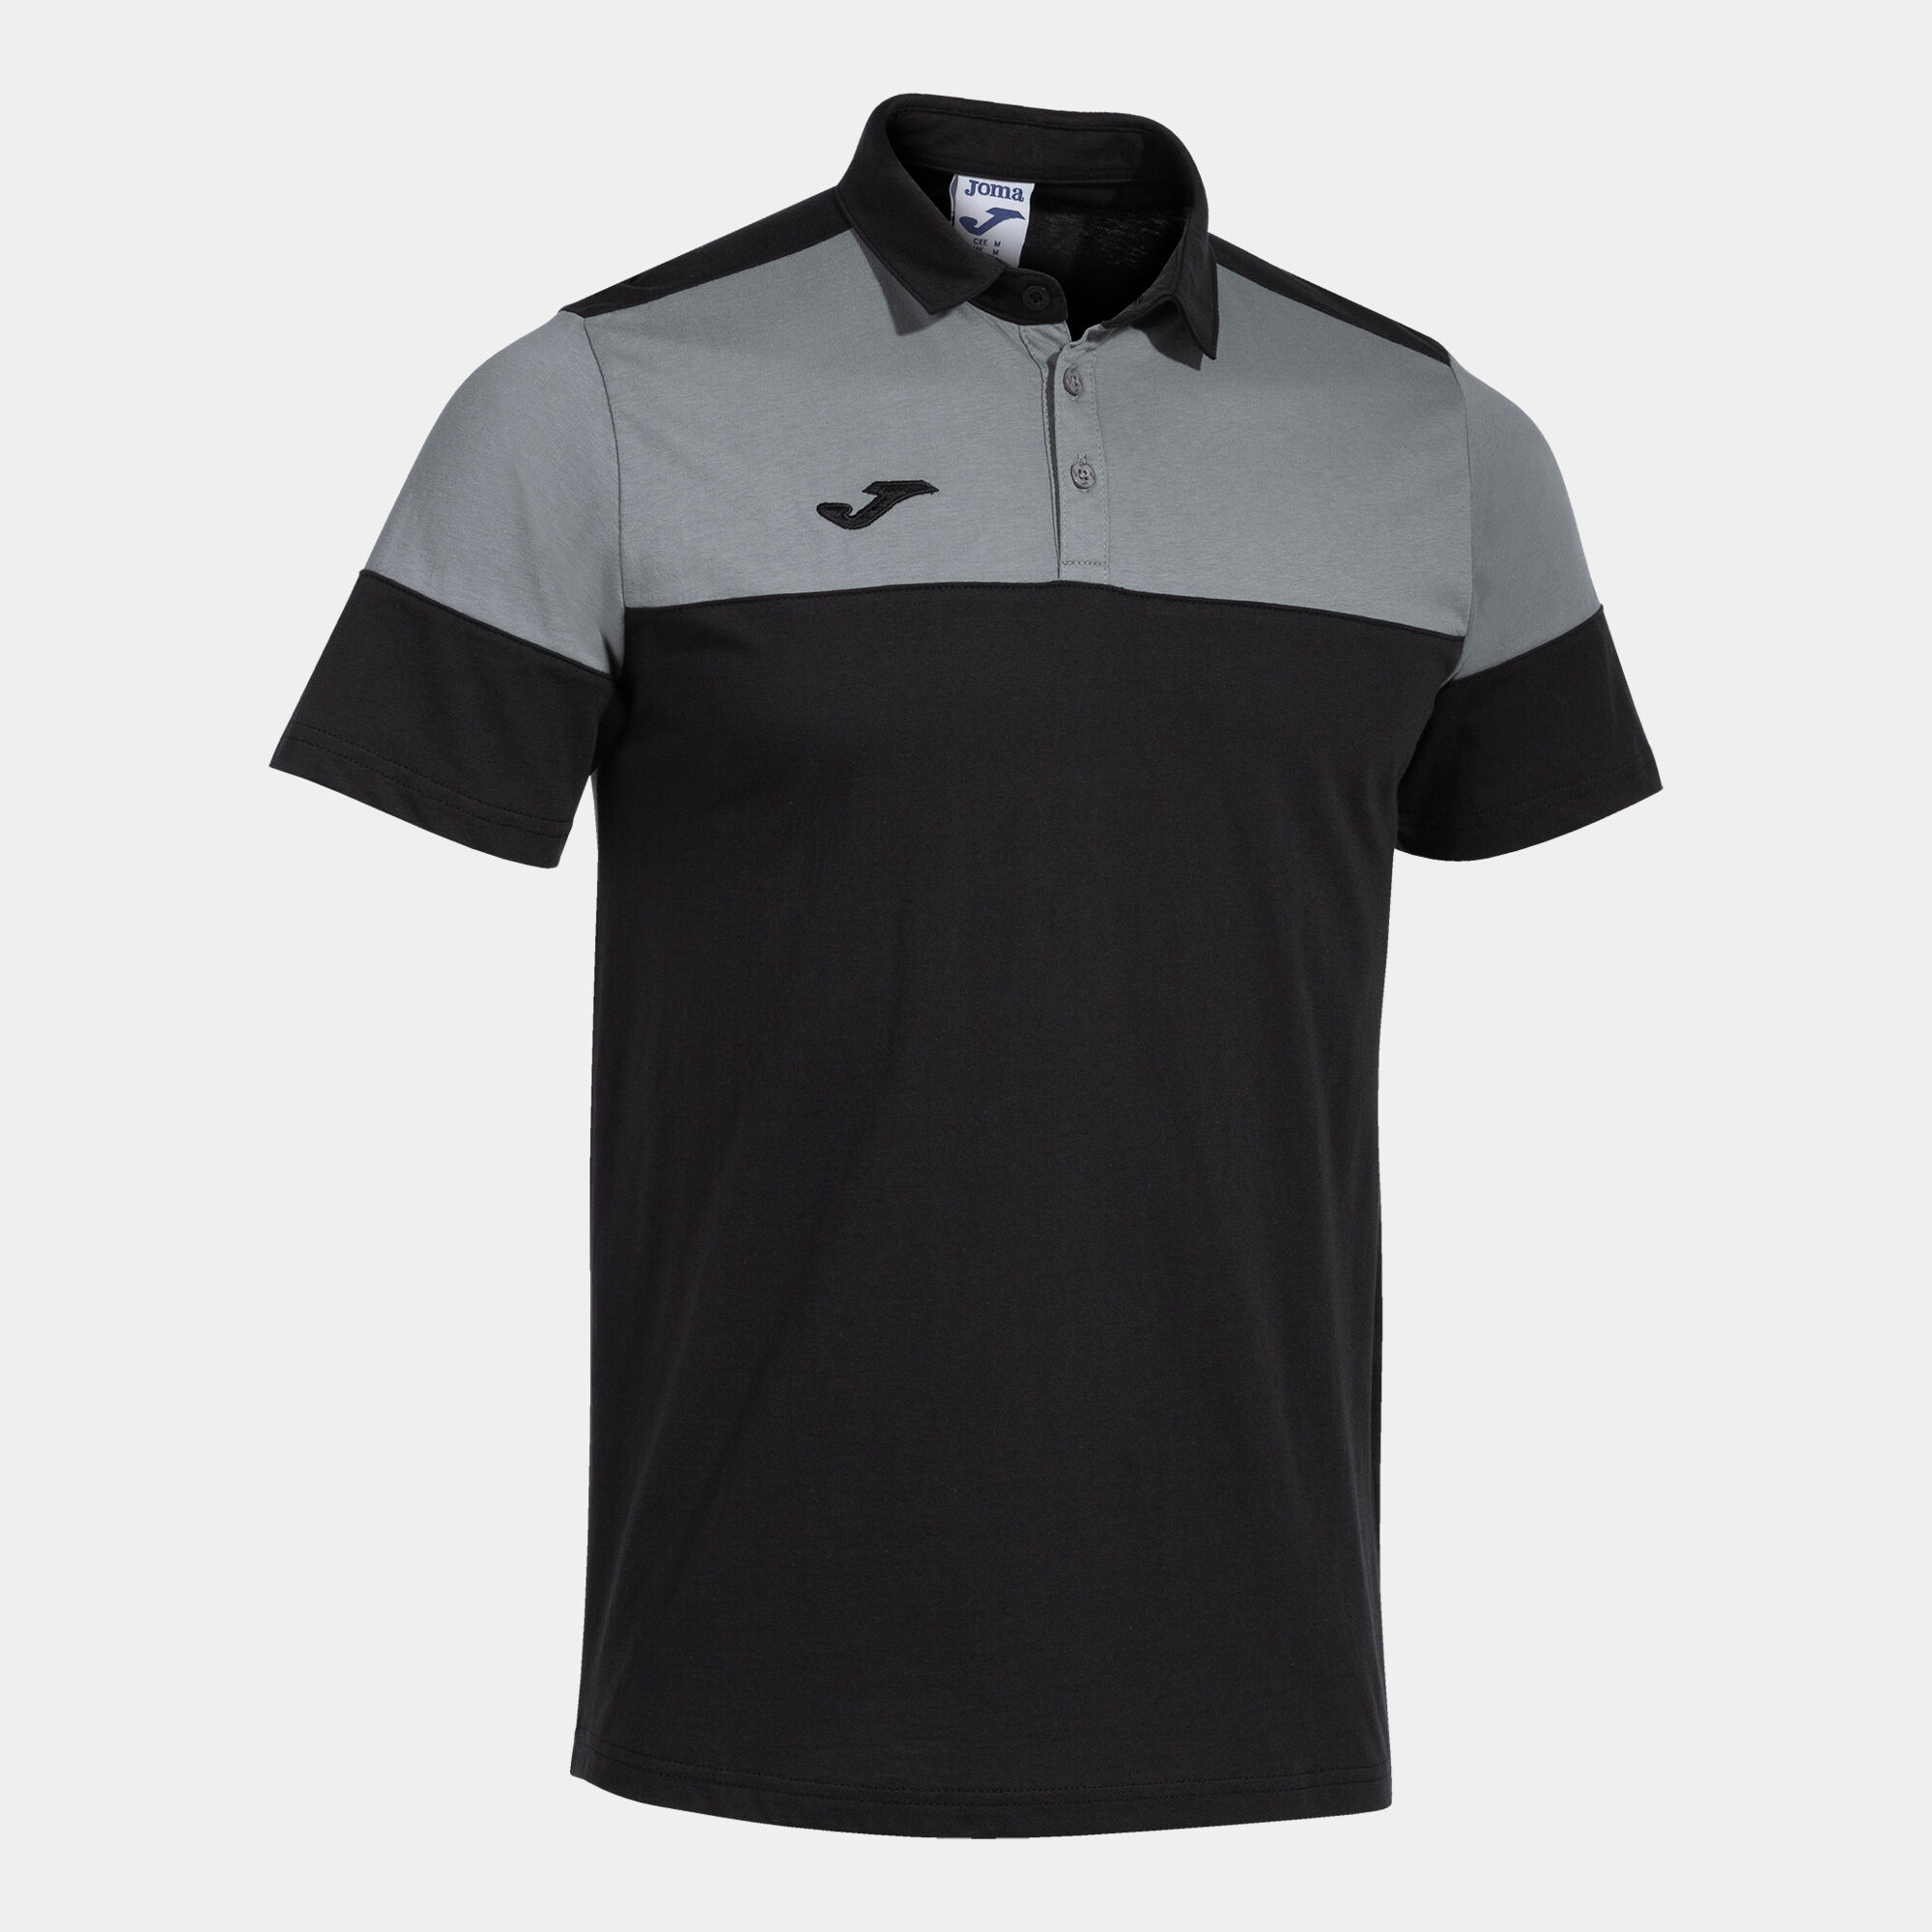 Polo shirt short-sleeve man Crew V black gray